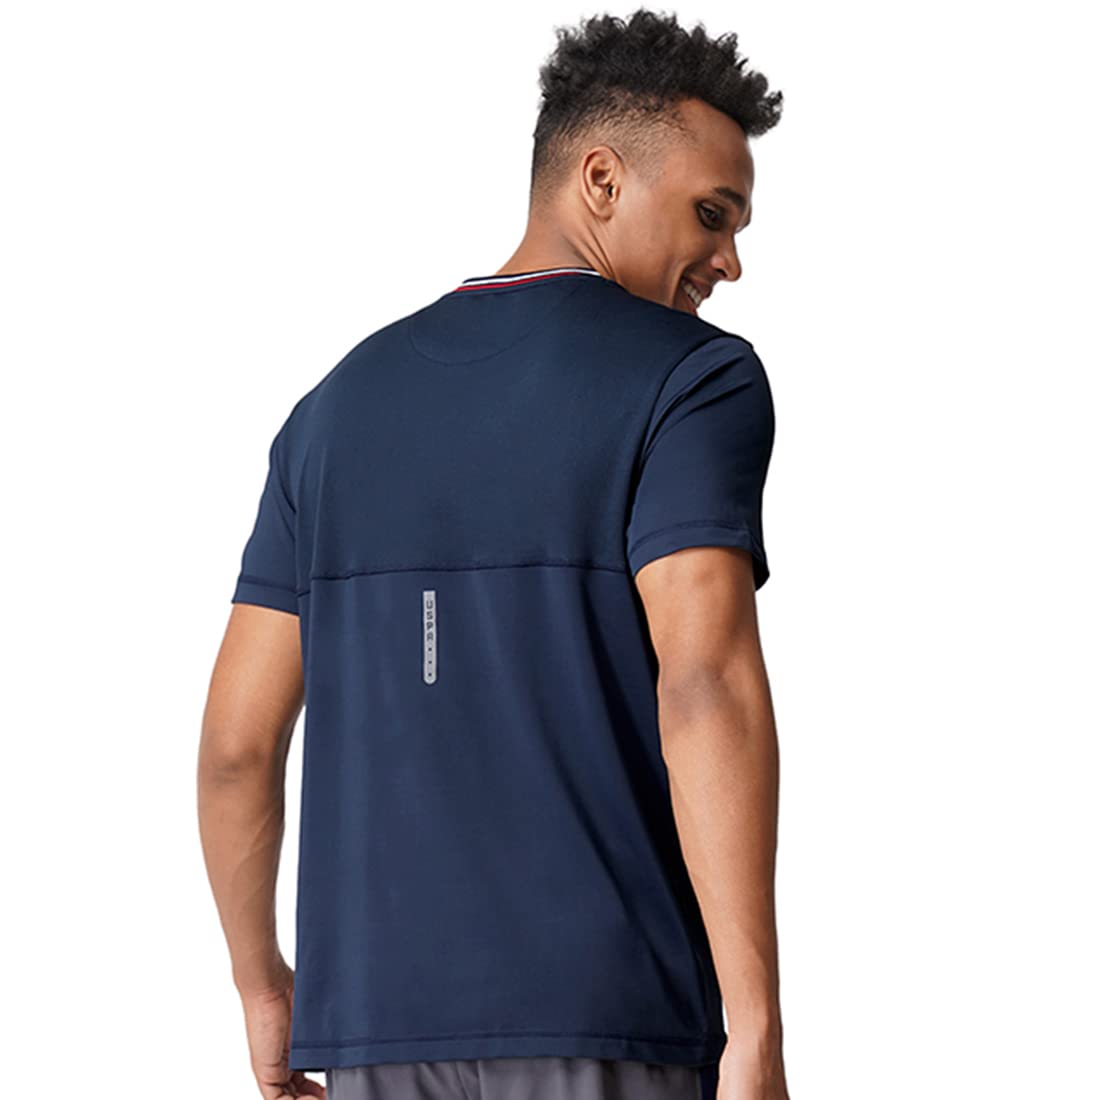 U.S. POLO ASSN. Men Reflective Logo Polyester Spandex I715 T-Shirt - Pack of 1 (Navy L)